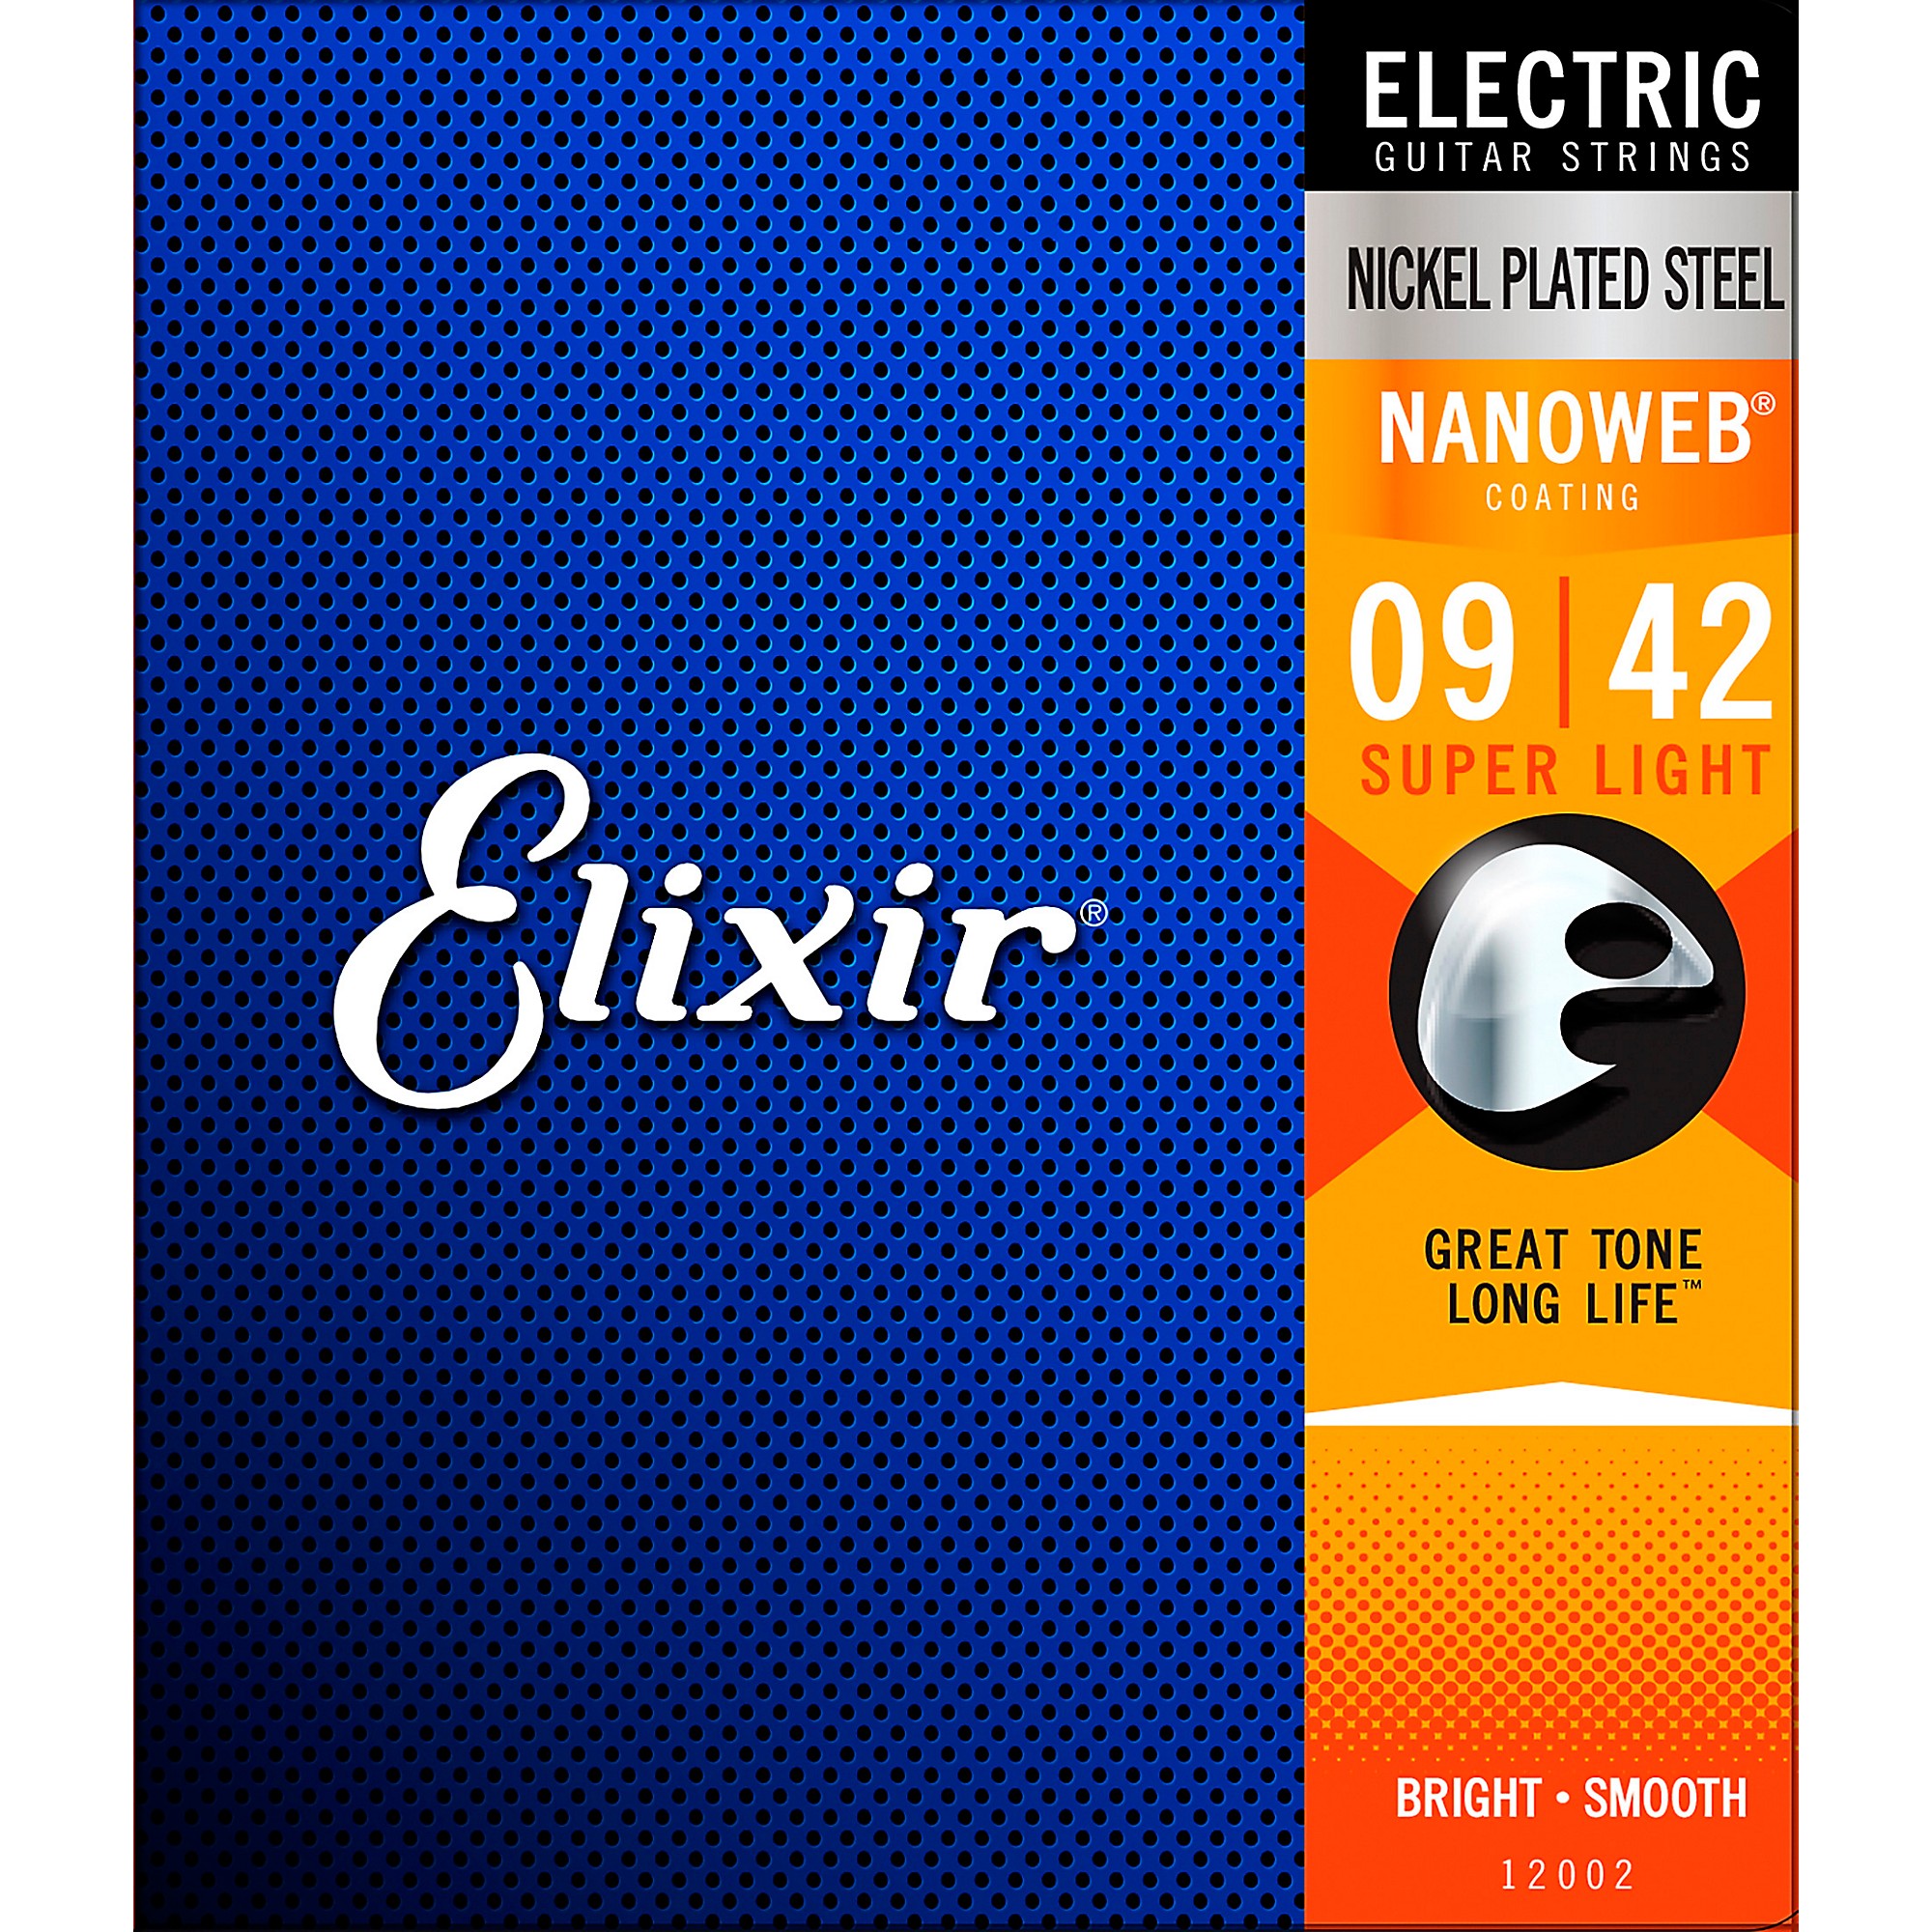 Elixir Electric Guitar Strings with NANOWEB Coating, Super Light